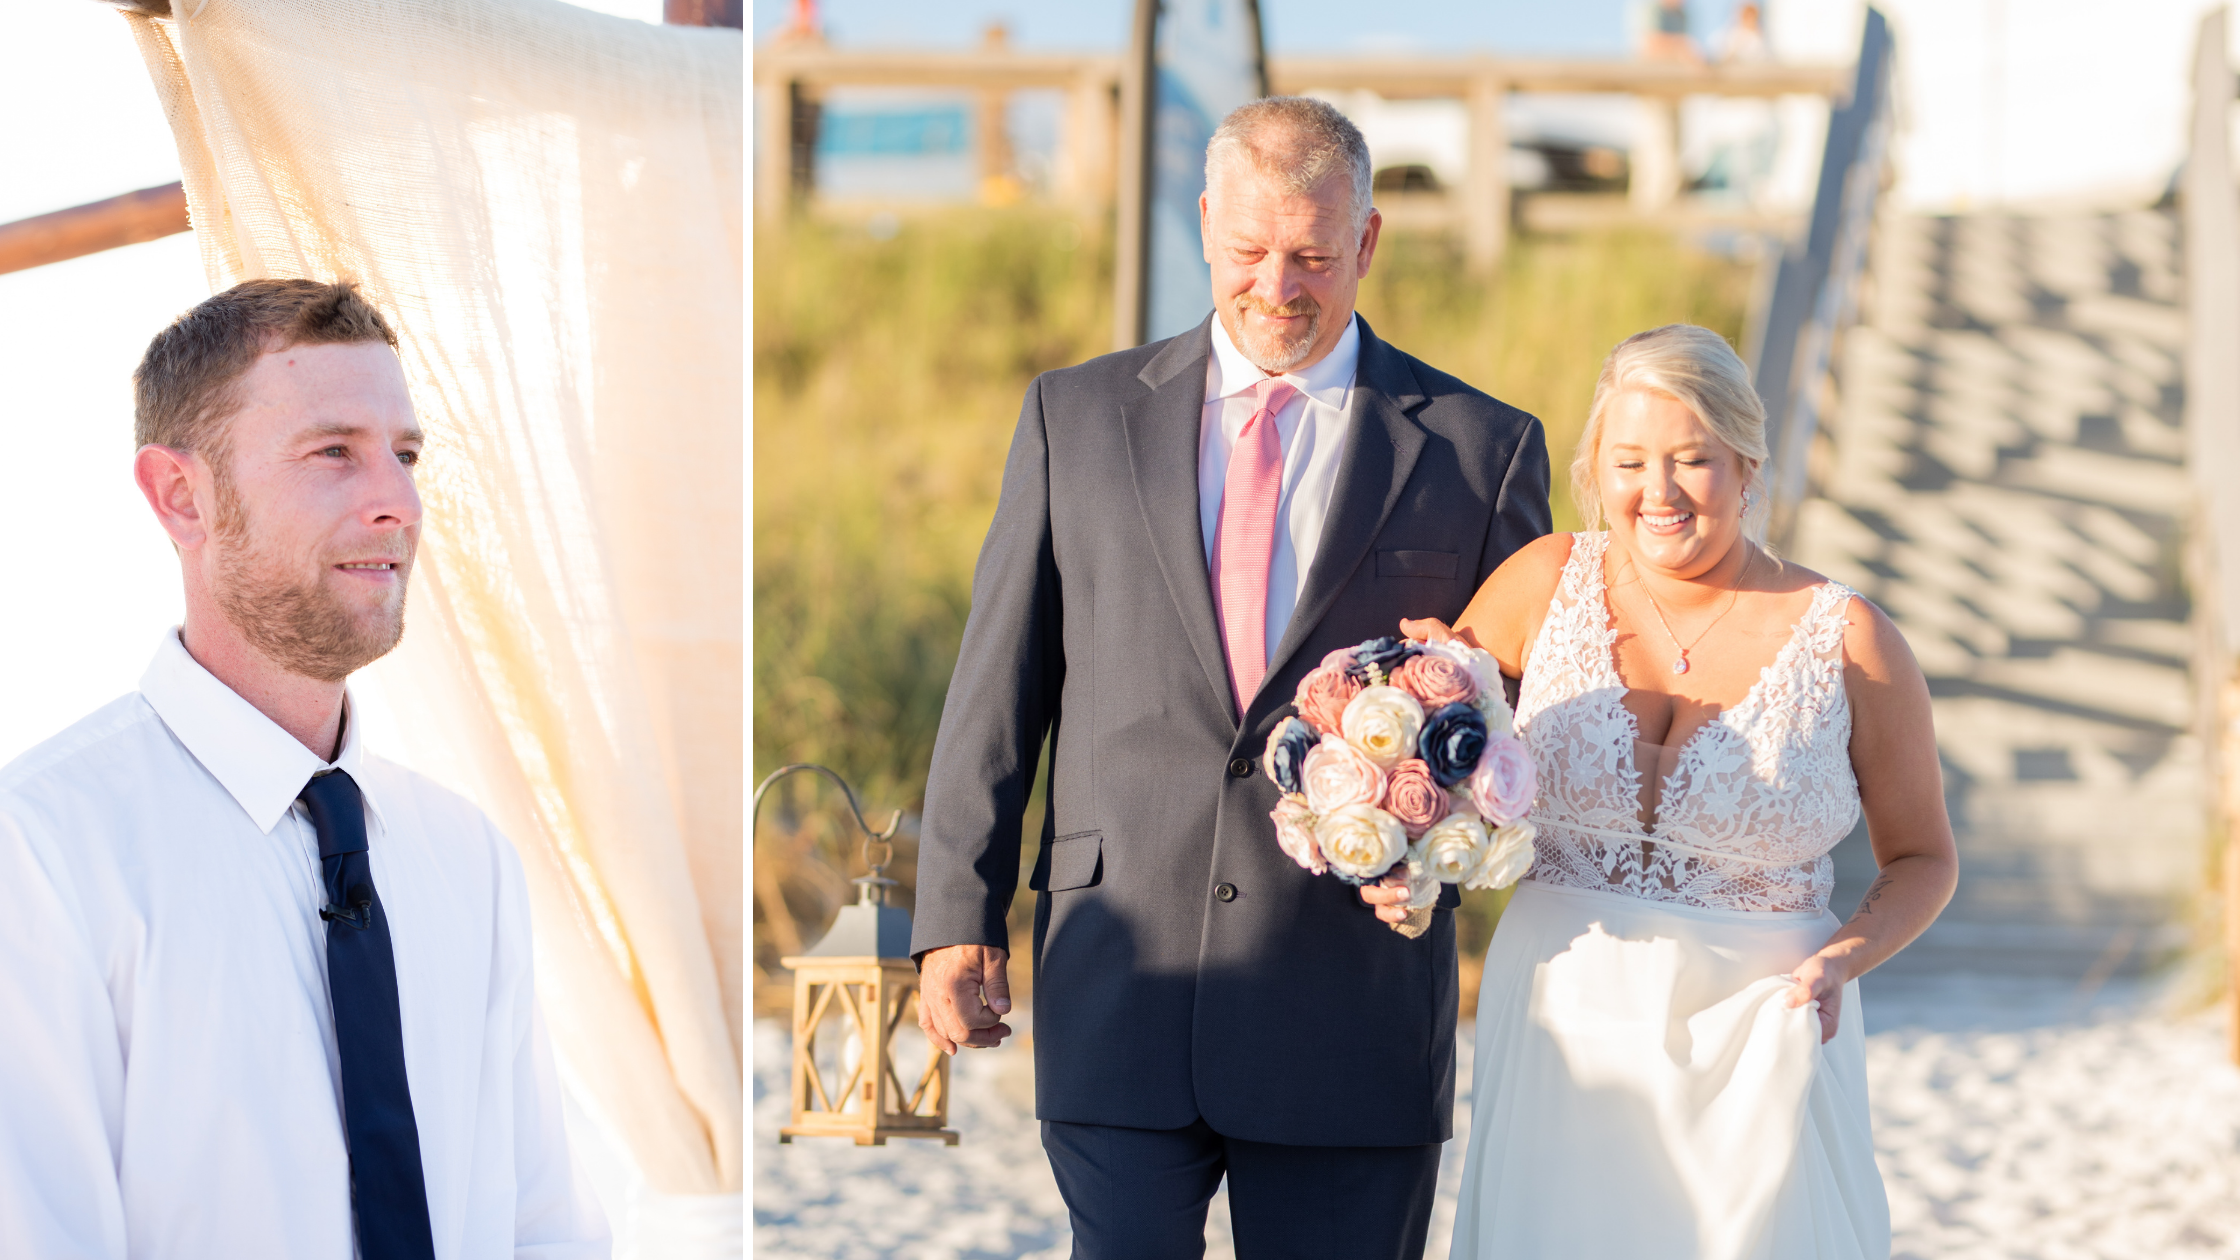 Destin Florida Beach Wedding Photographed by Kristen Marcus Photography